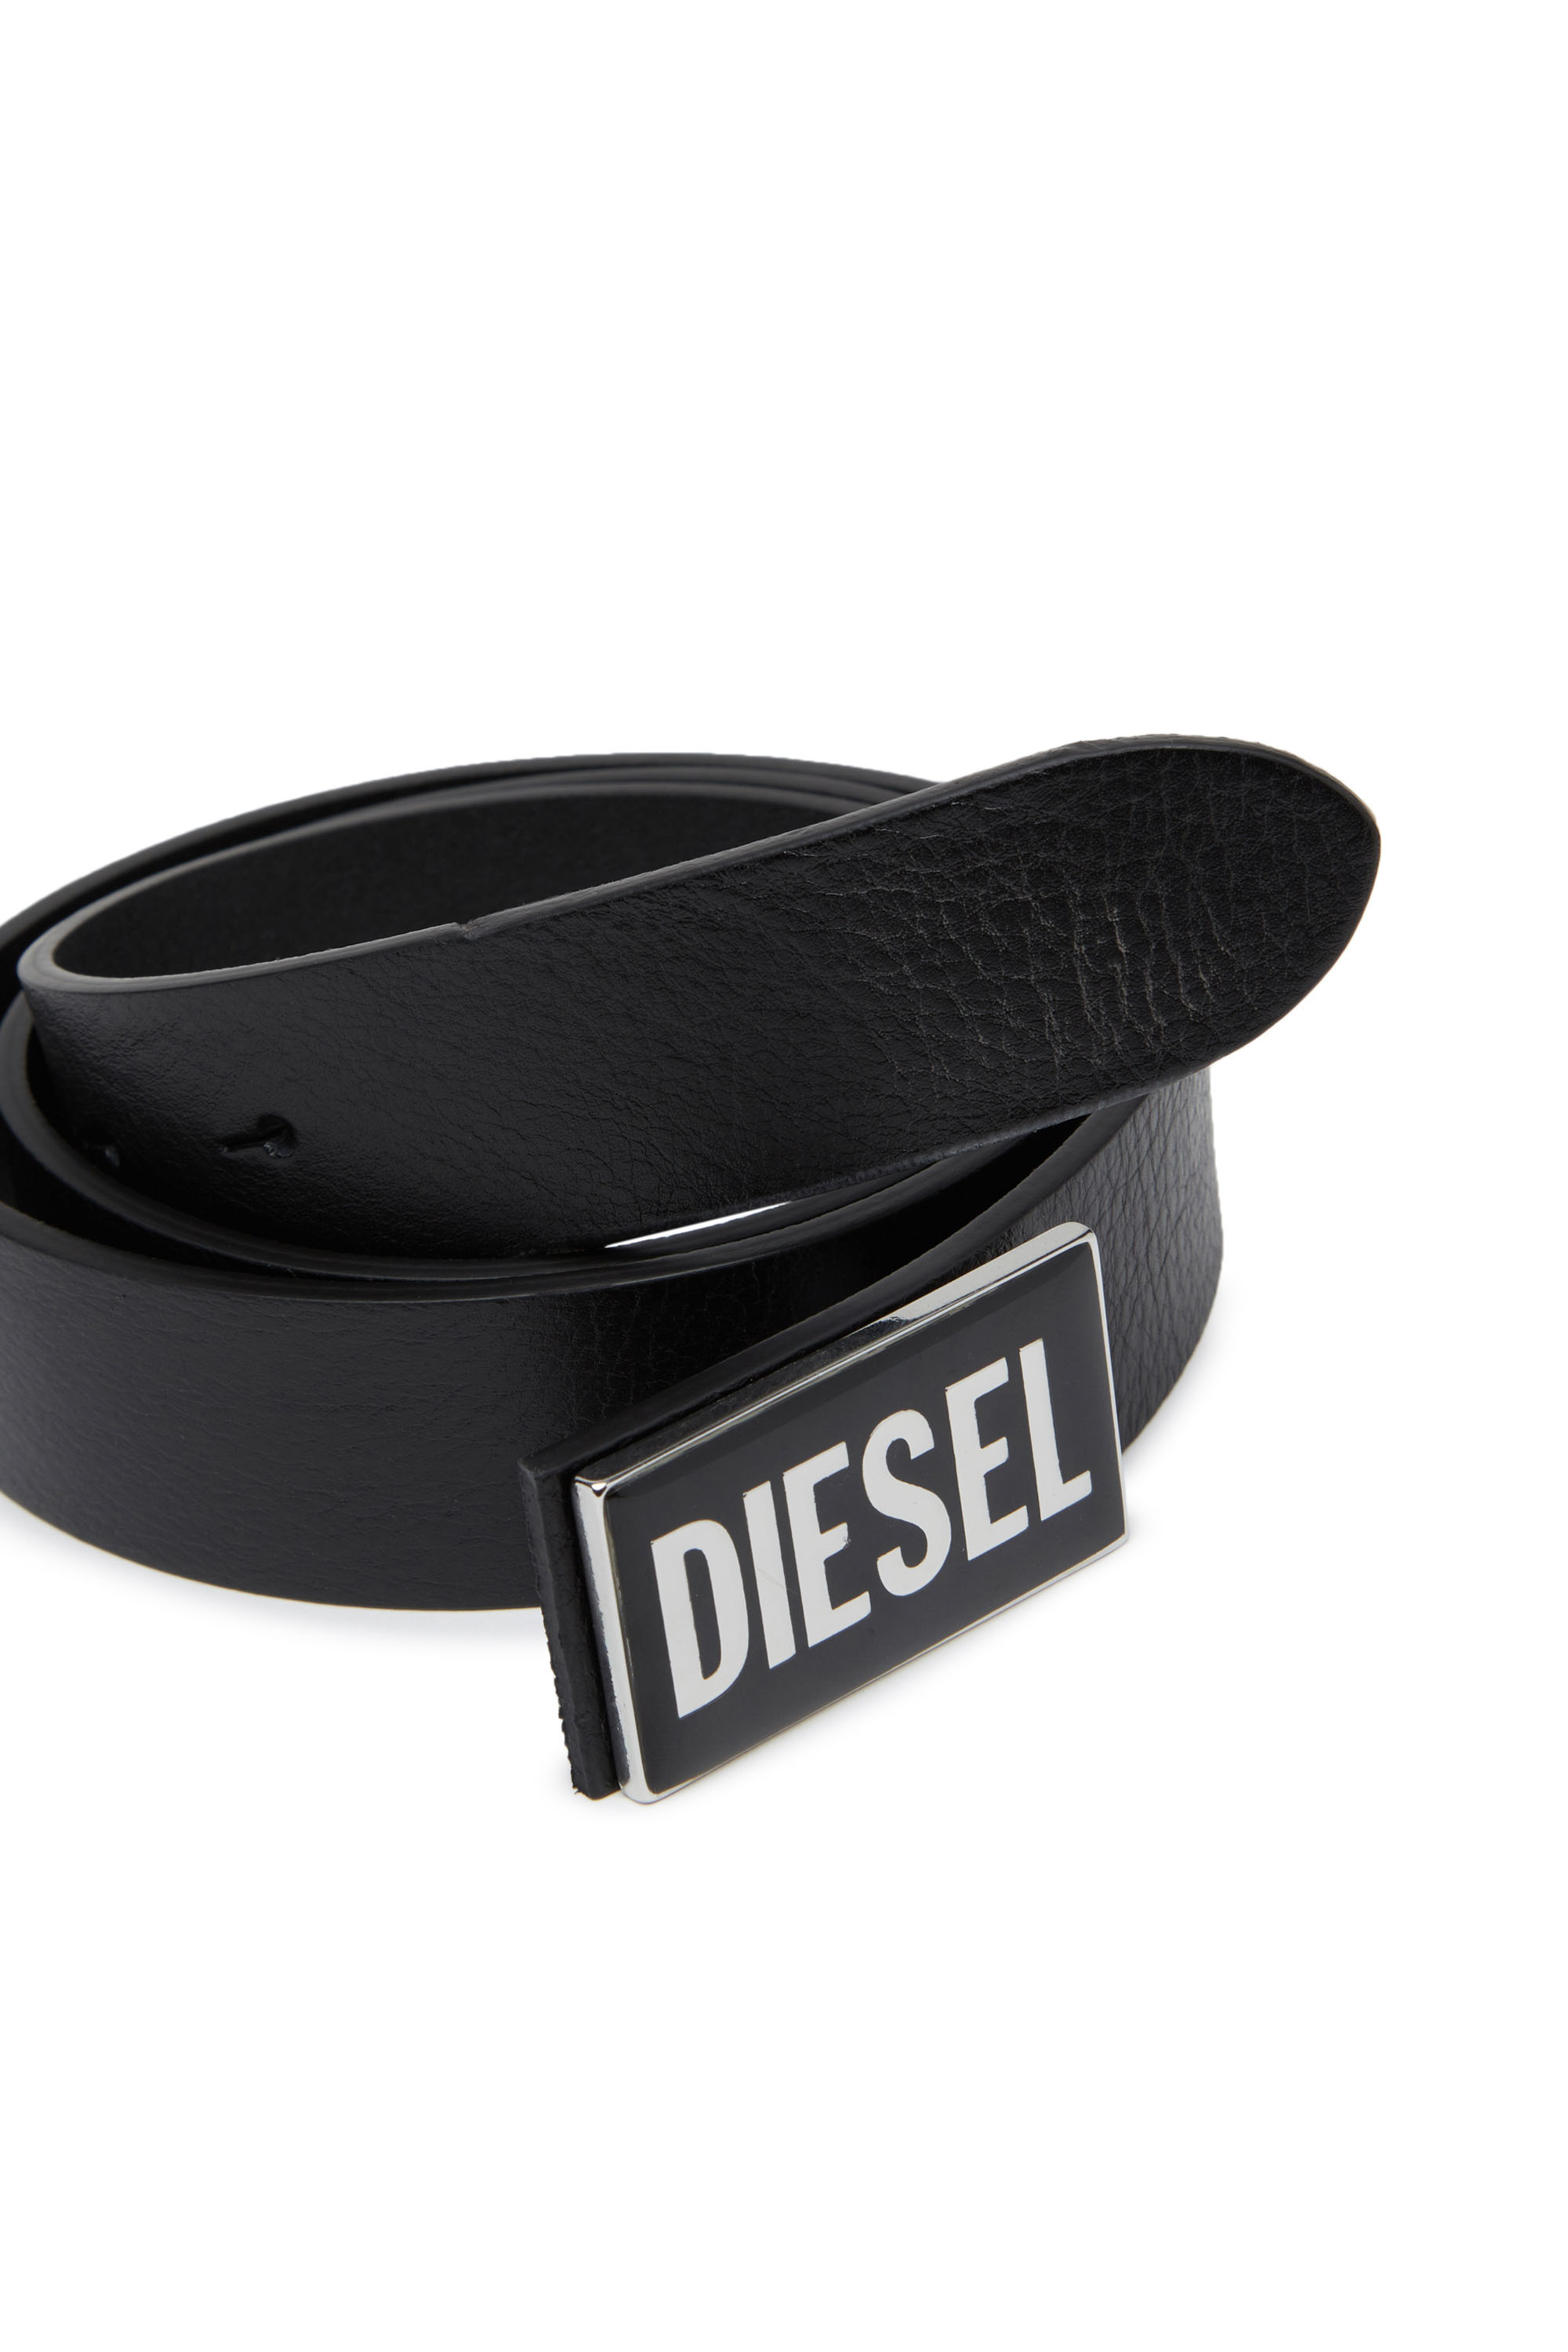 Diesel - B-GLOSSY, Negro - Image 3